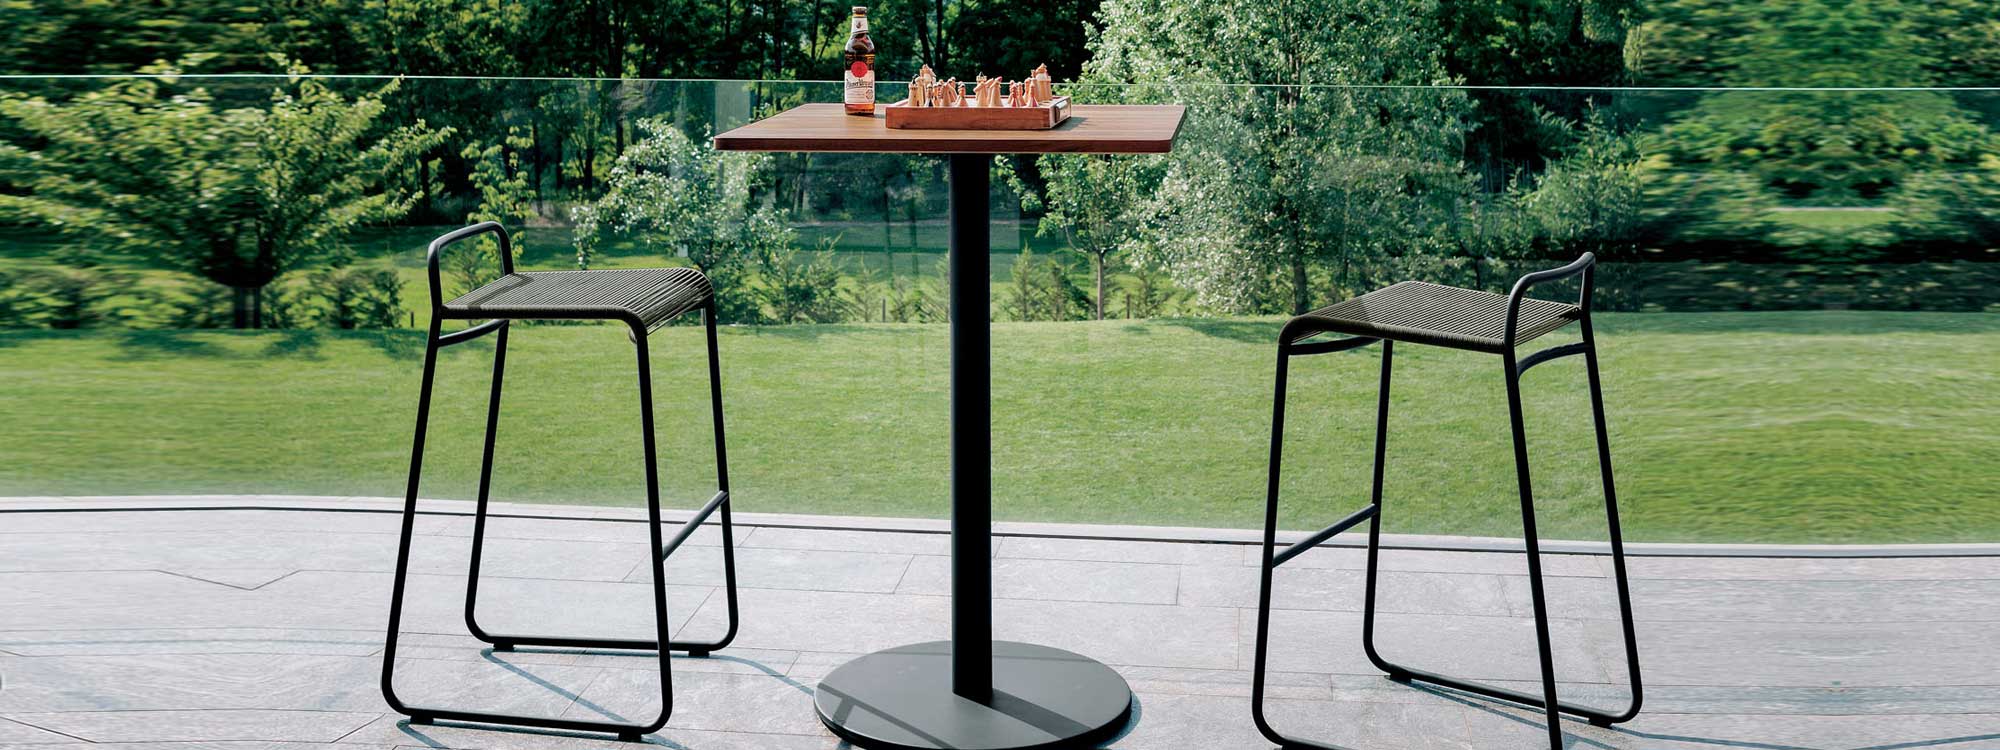 Harp exterior bar stool is a designer garden barstool by Rodolfo Dordoni in high quality garden furniture materials by Roda garden furniture